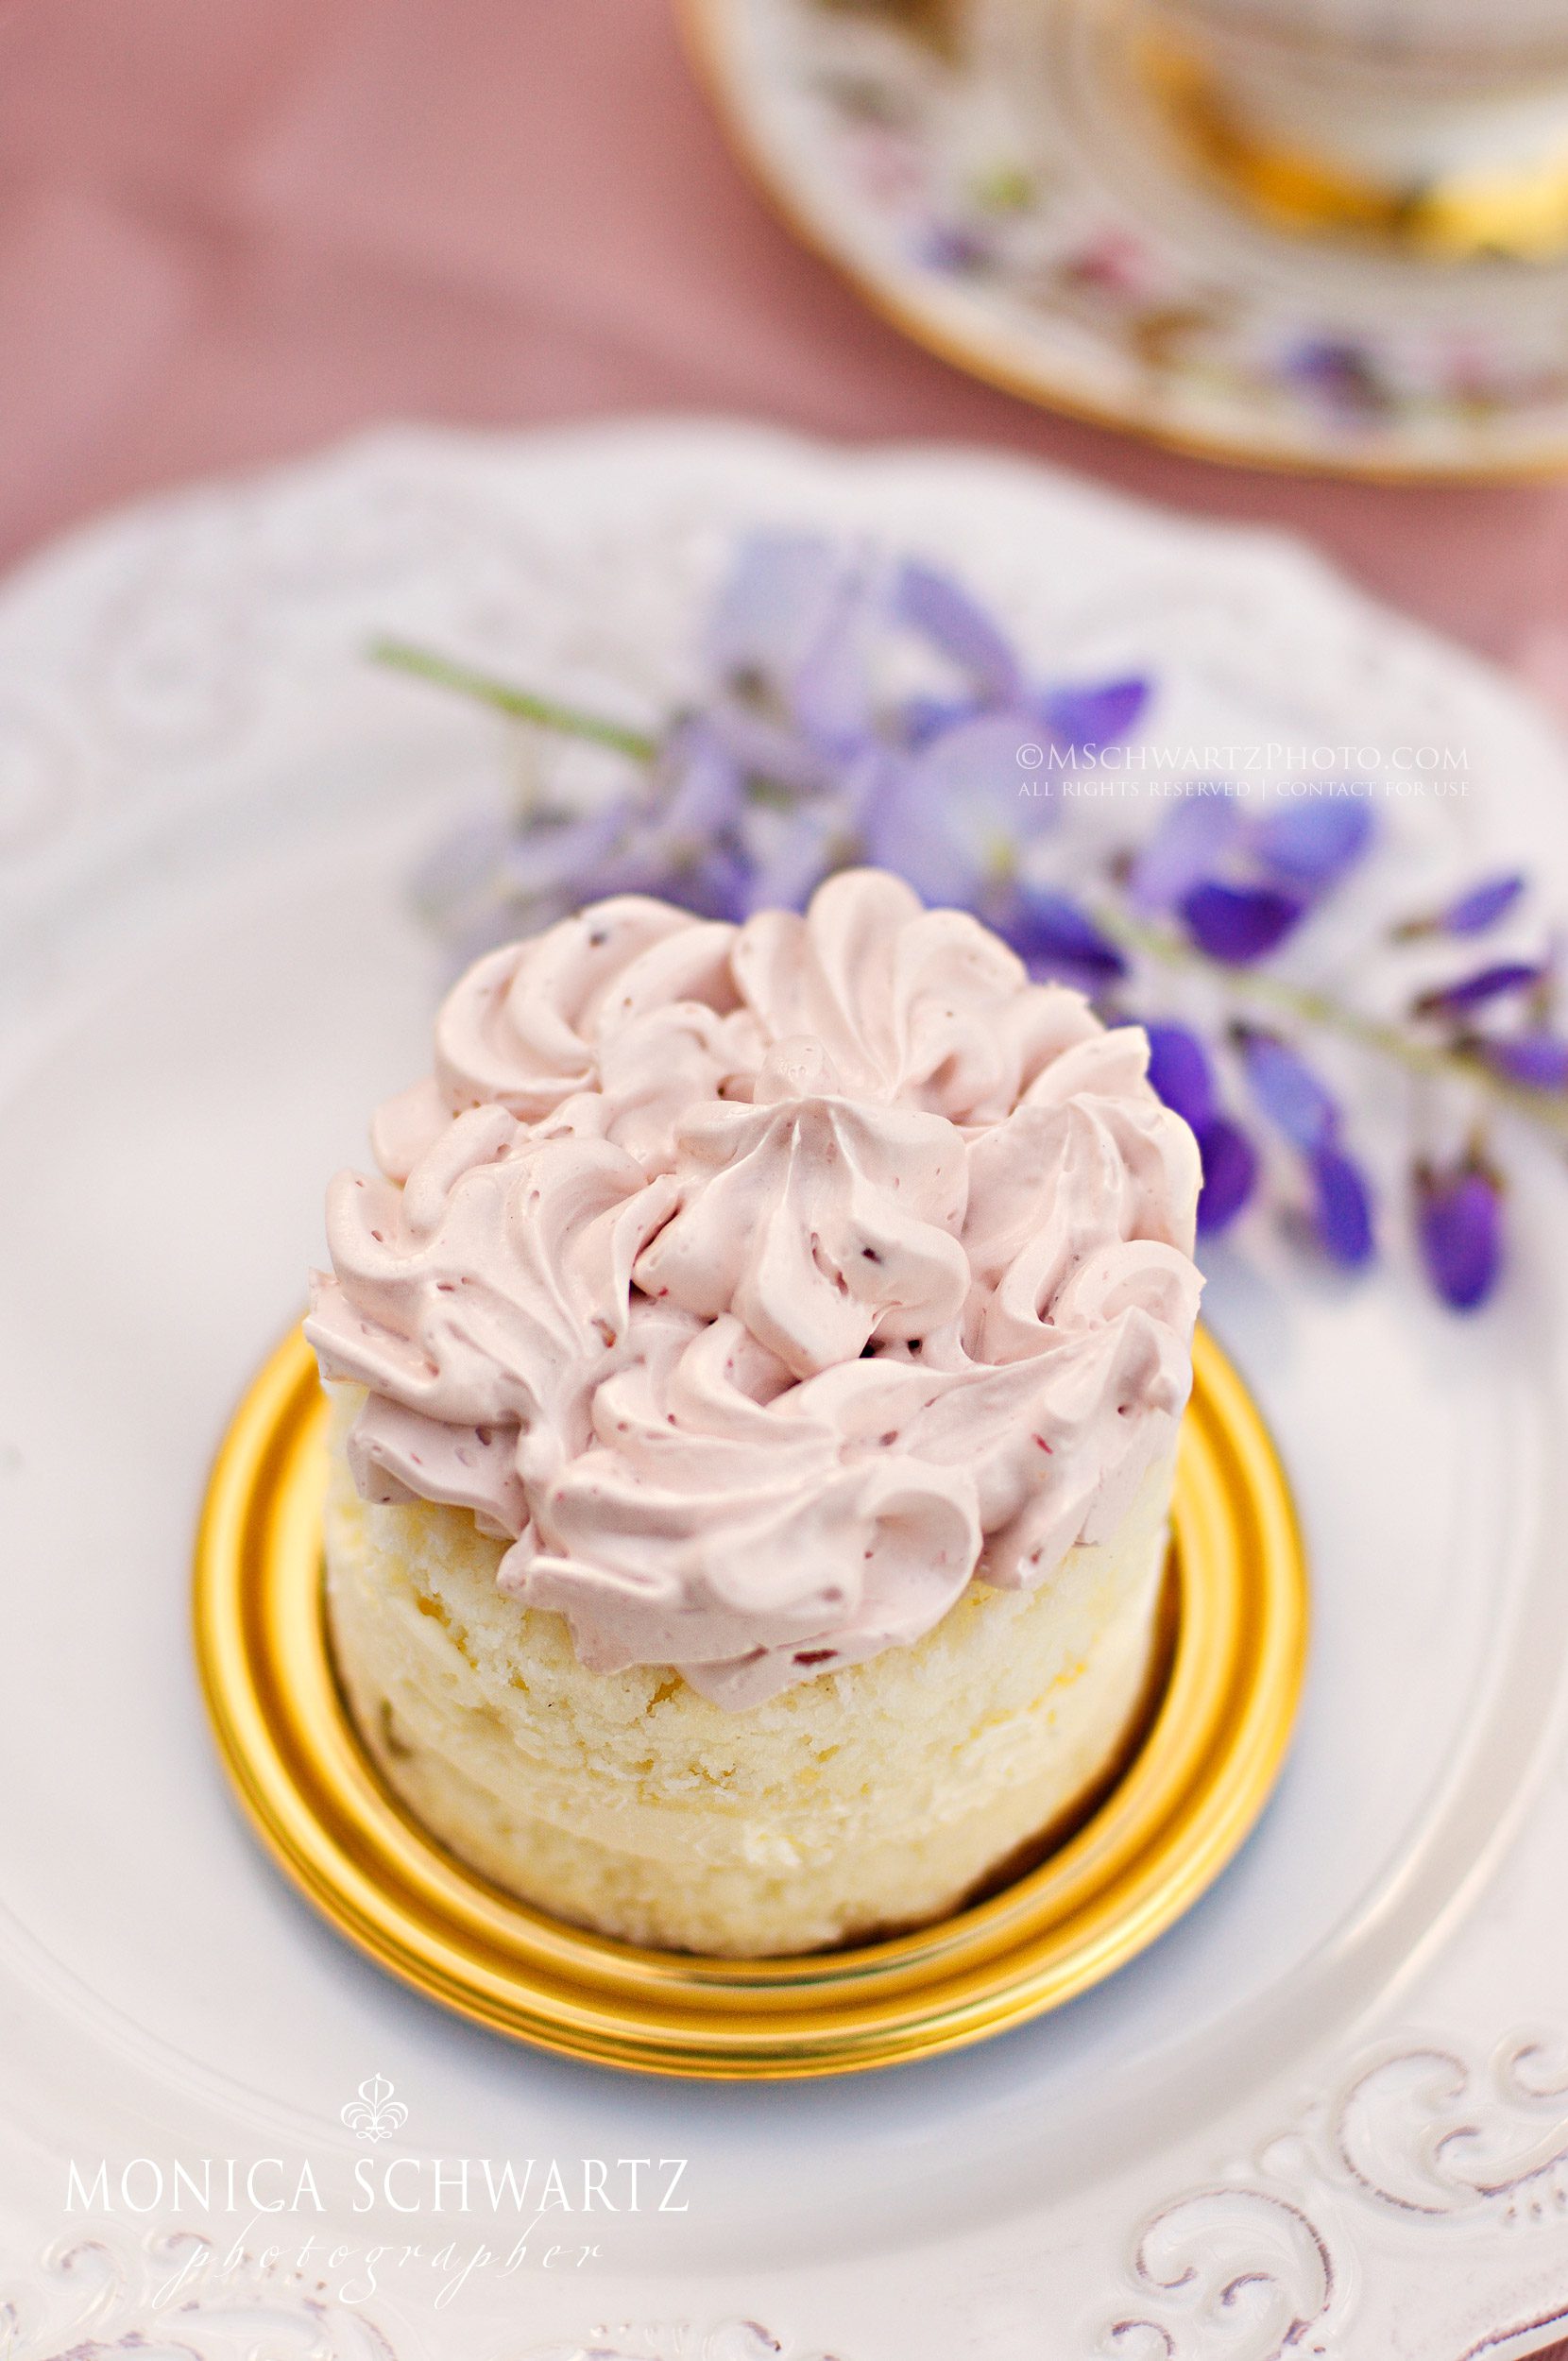 Mini-Lavender-Cake-with-Rose-Buttercream-by-Patisserie-Angelica-in-Sebastopol-California